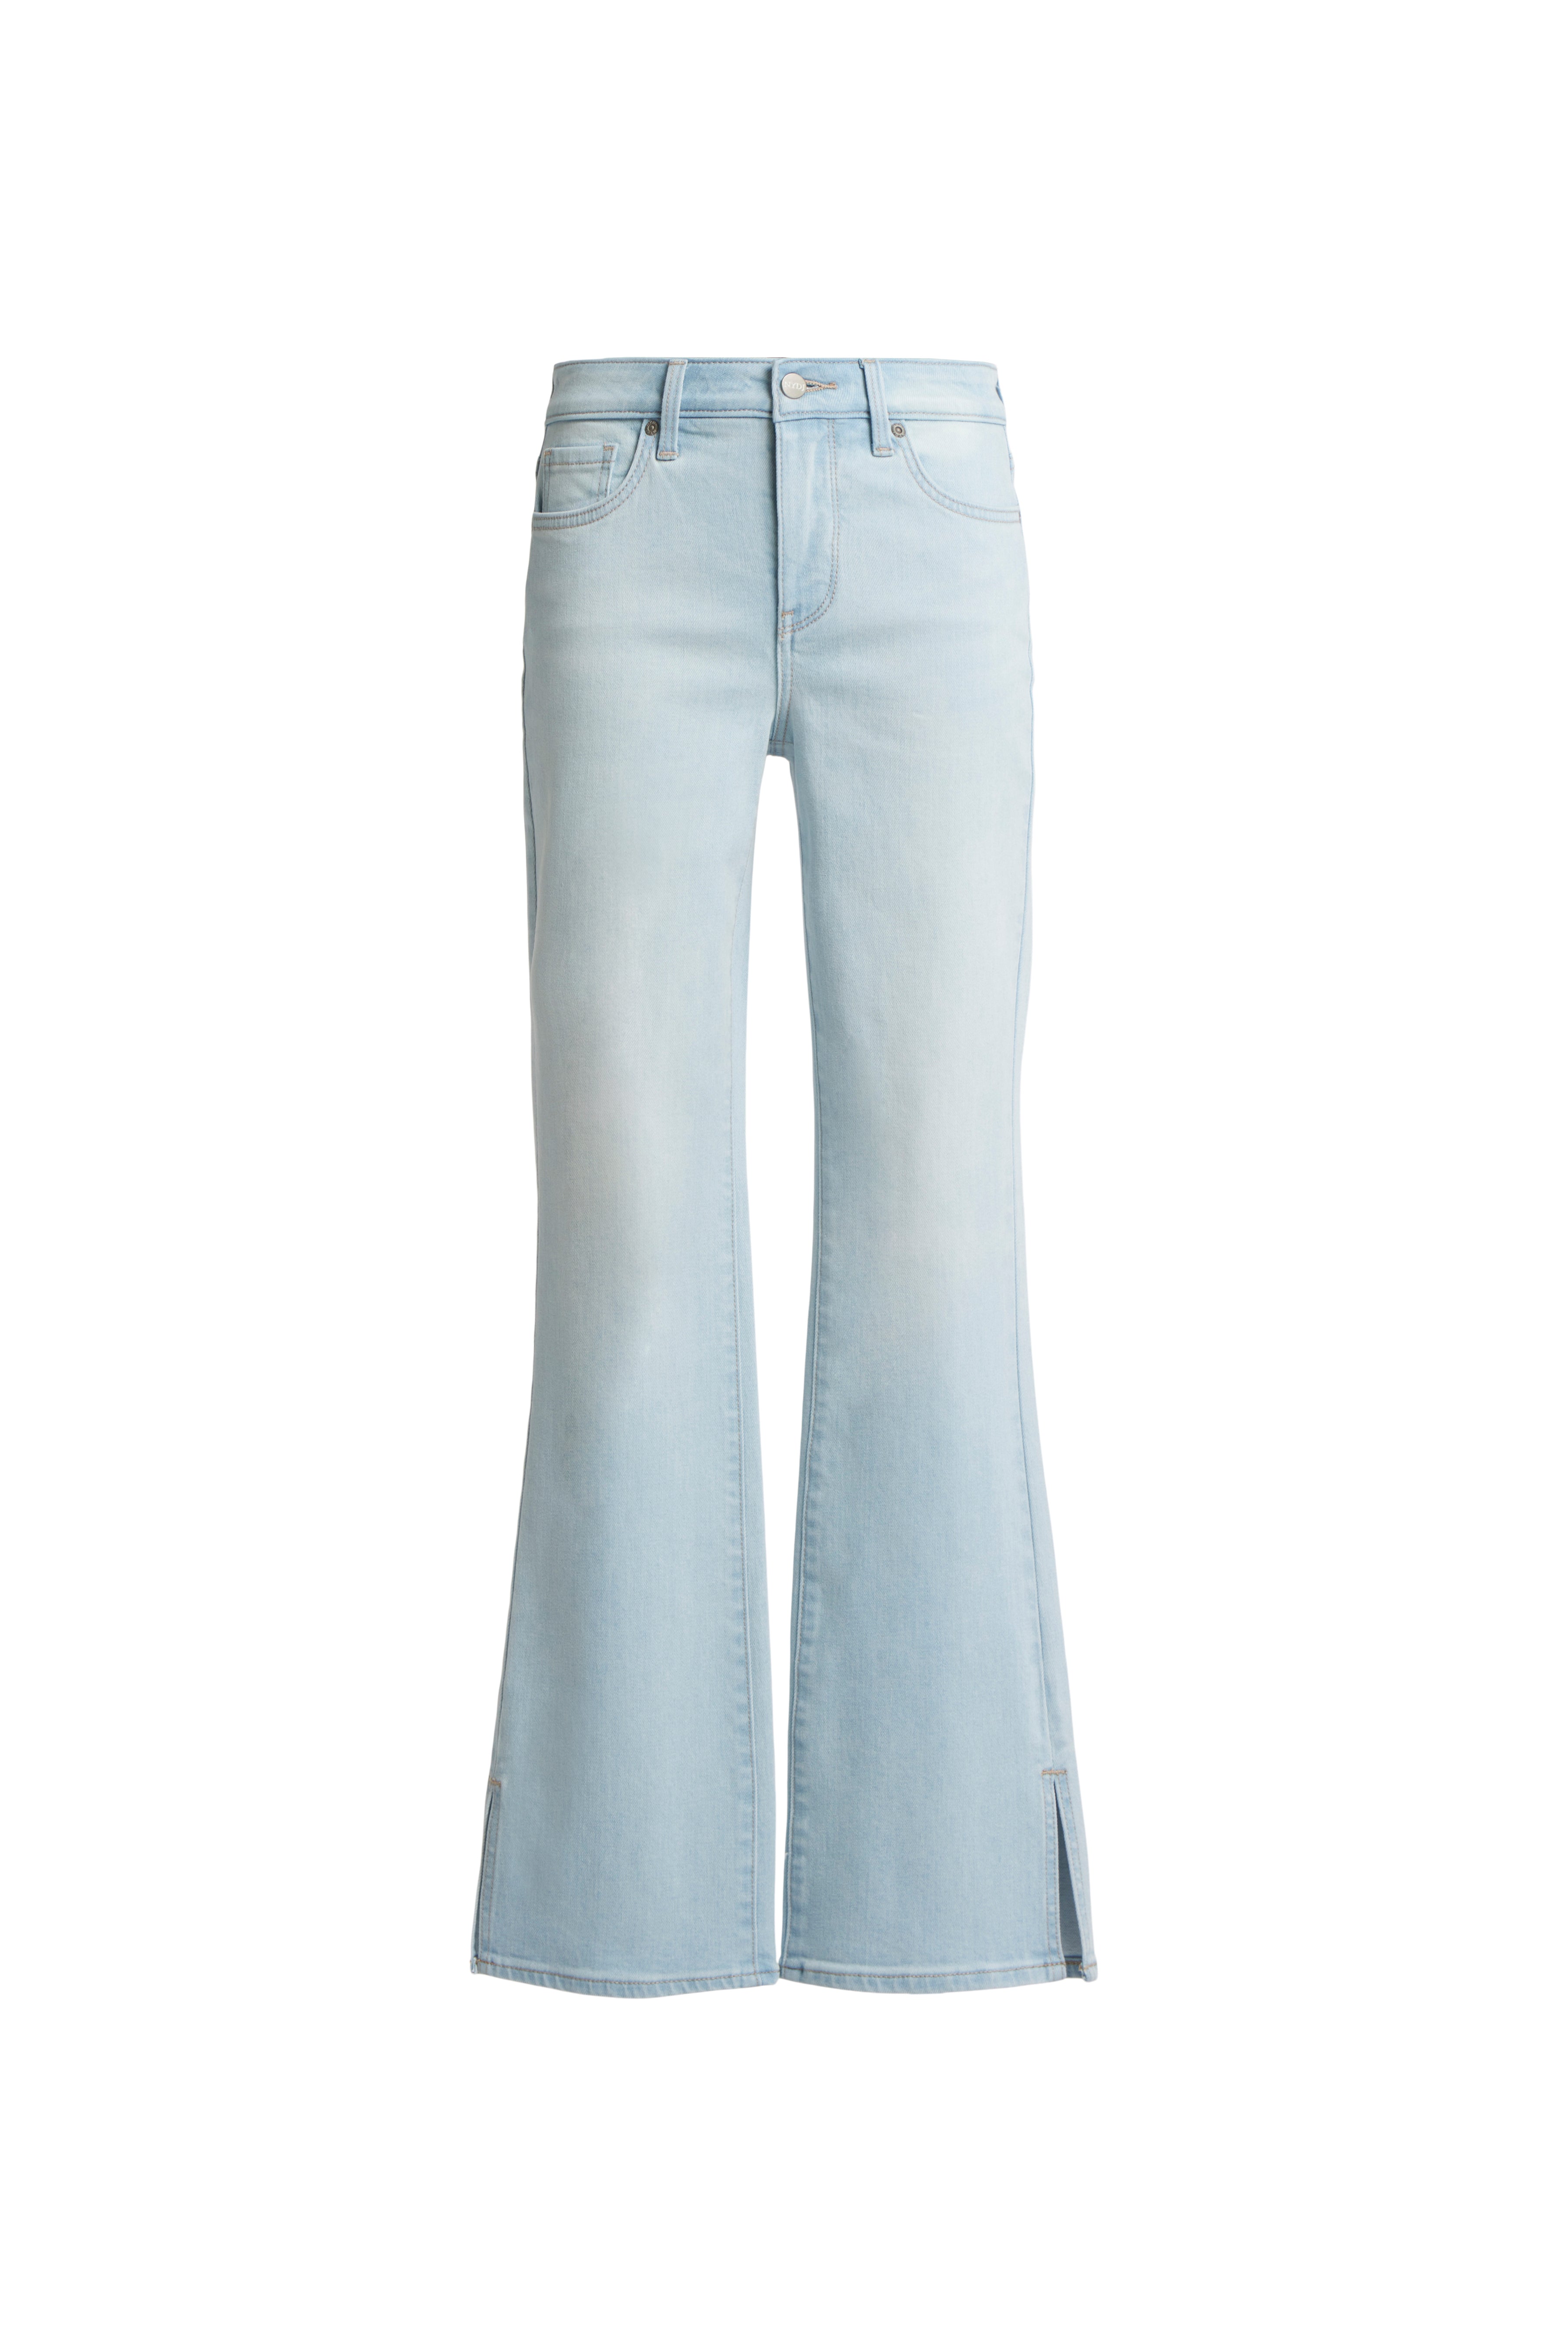 Only The Best Vibes Bell Bottom Jeans - Medium Blue Wash | Fashion Nova,  Jeans | Fashion Nova